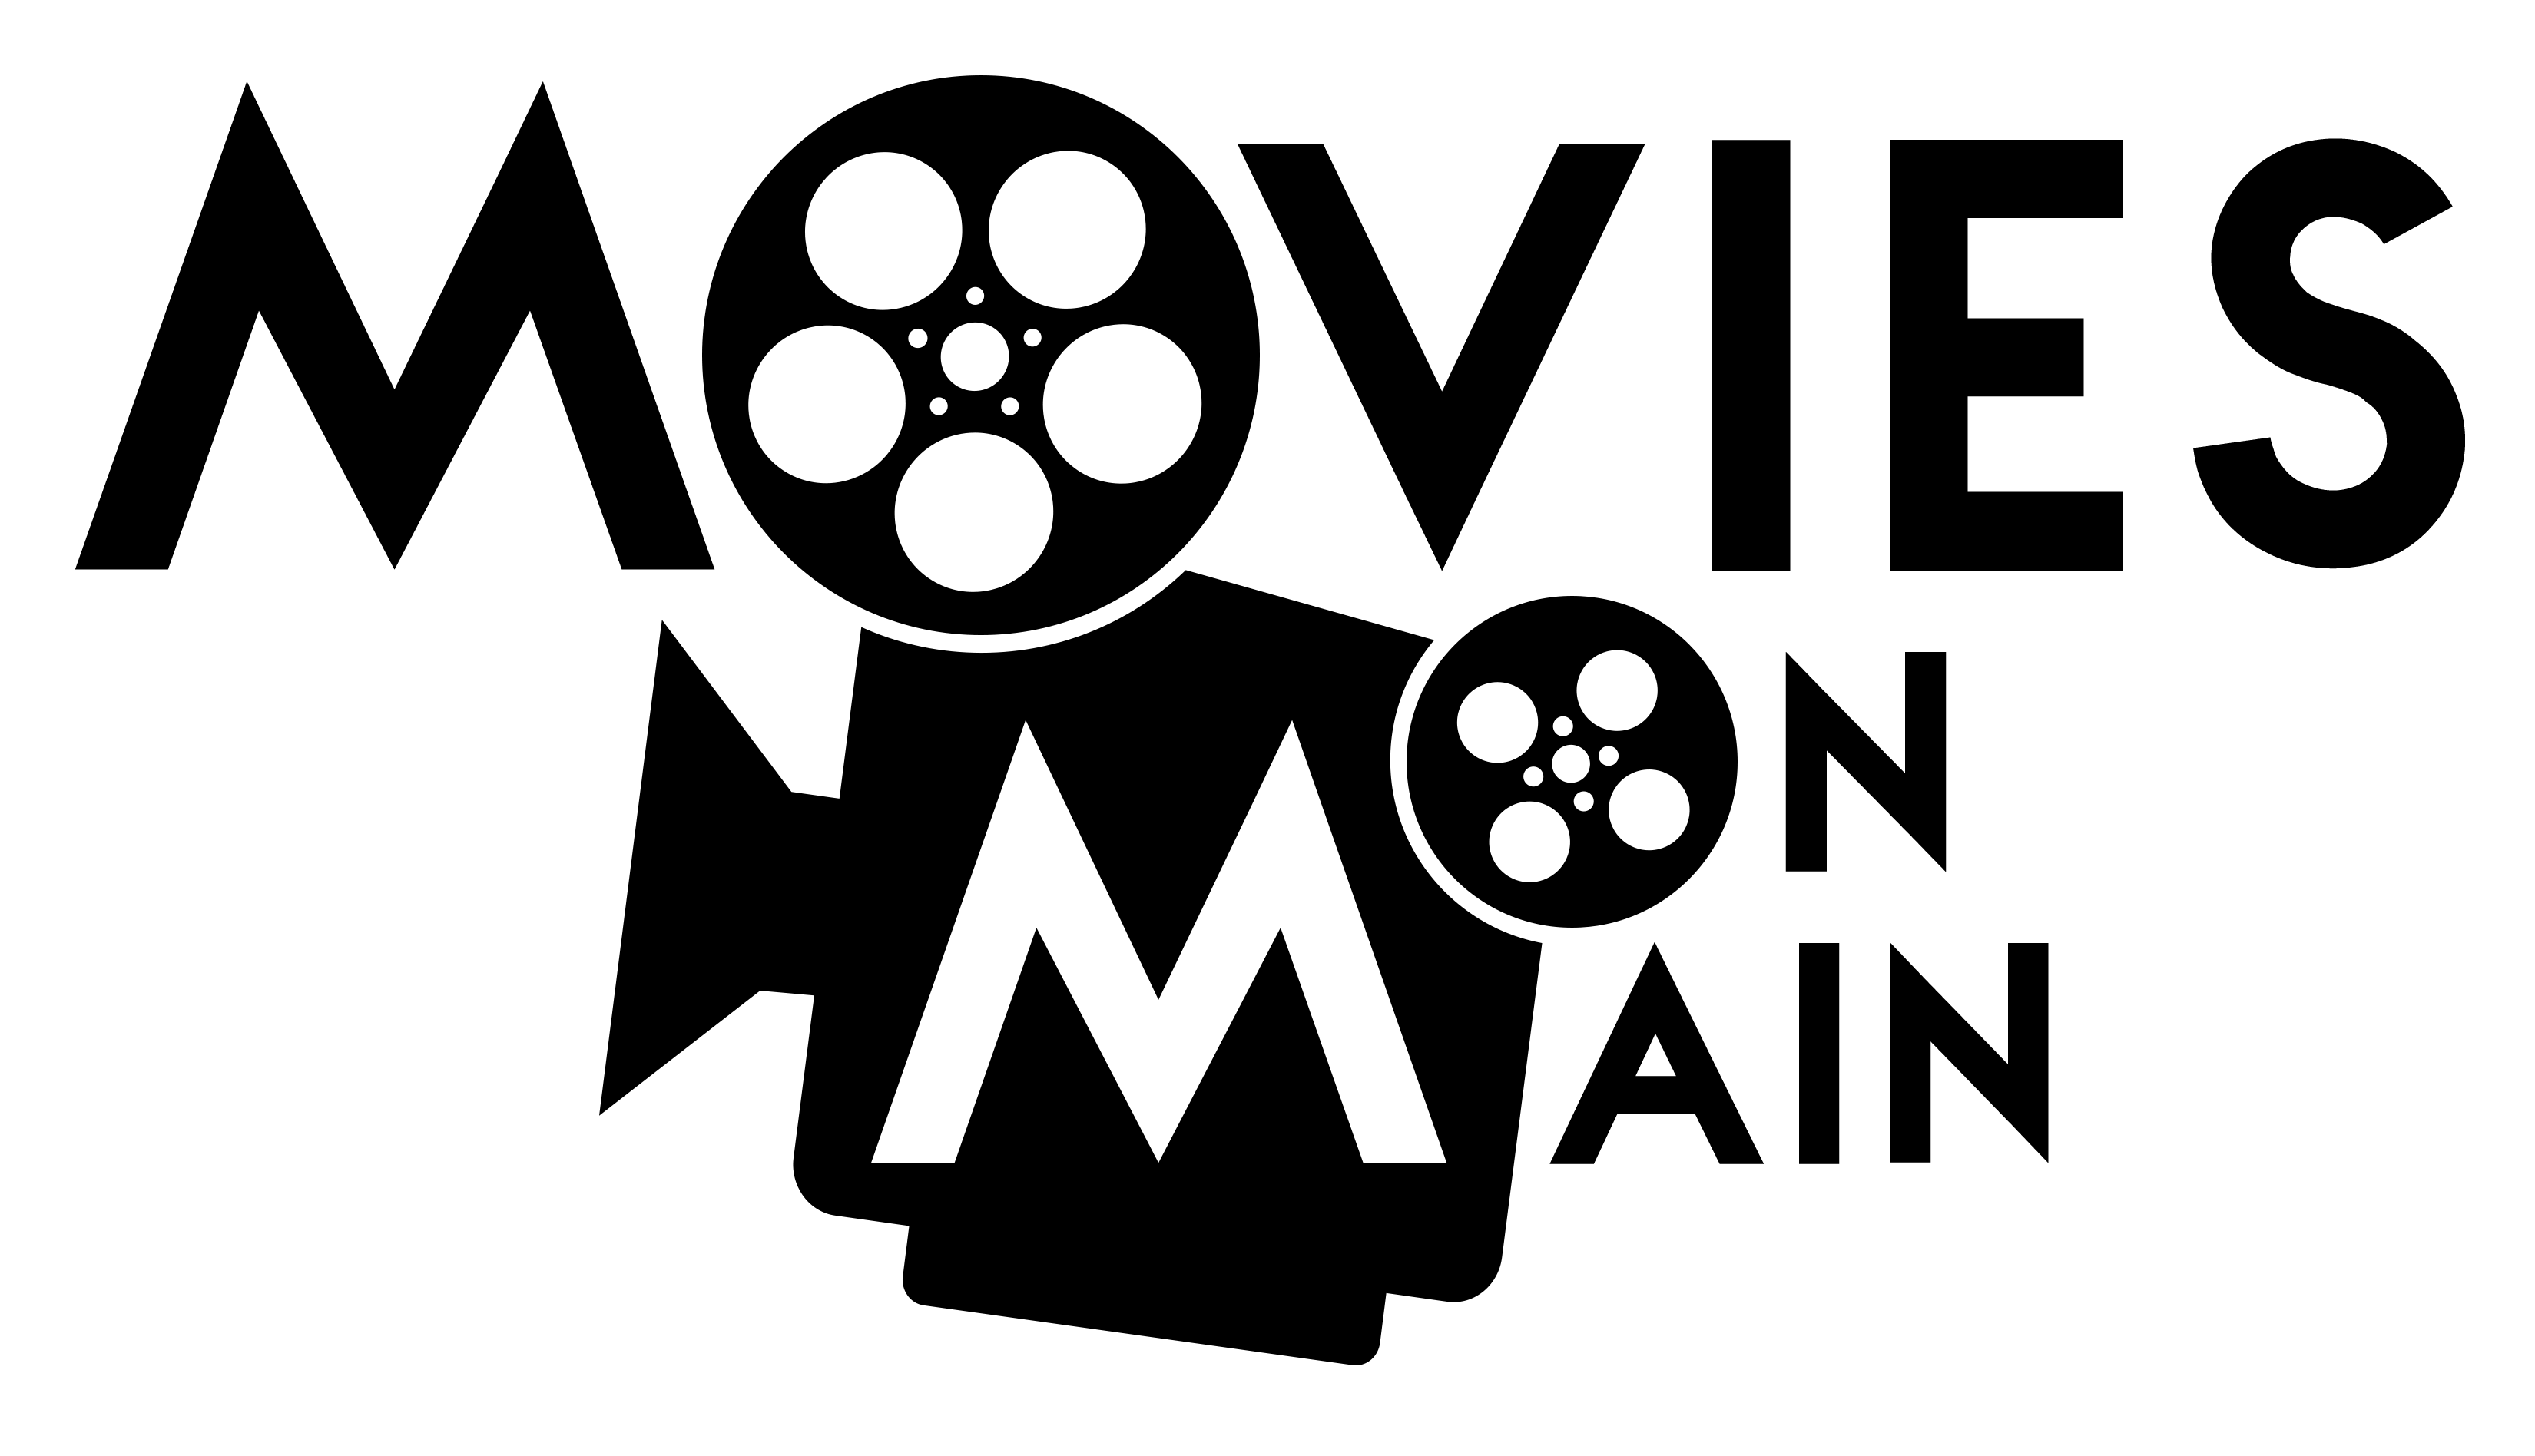 Google Main Logo - Movies on Main Logos